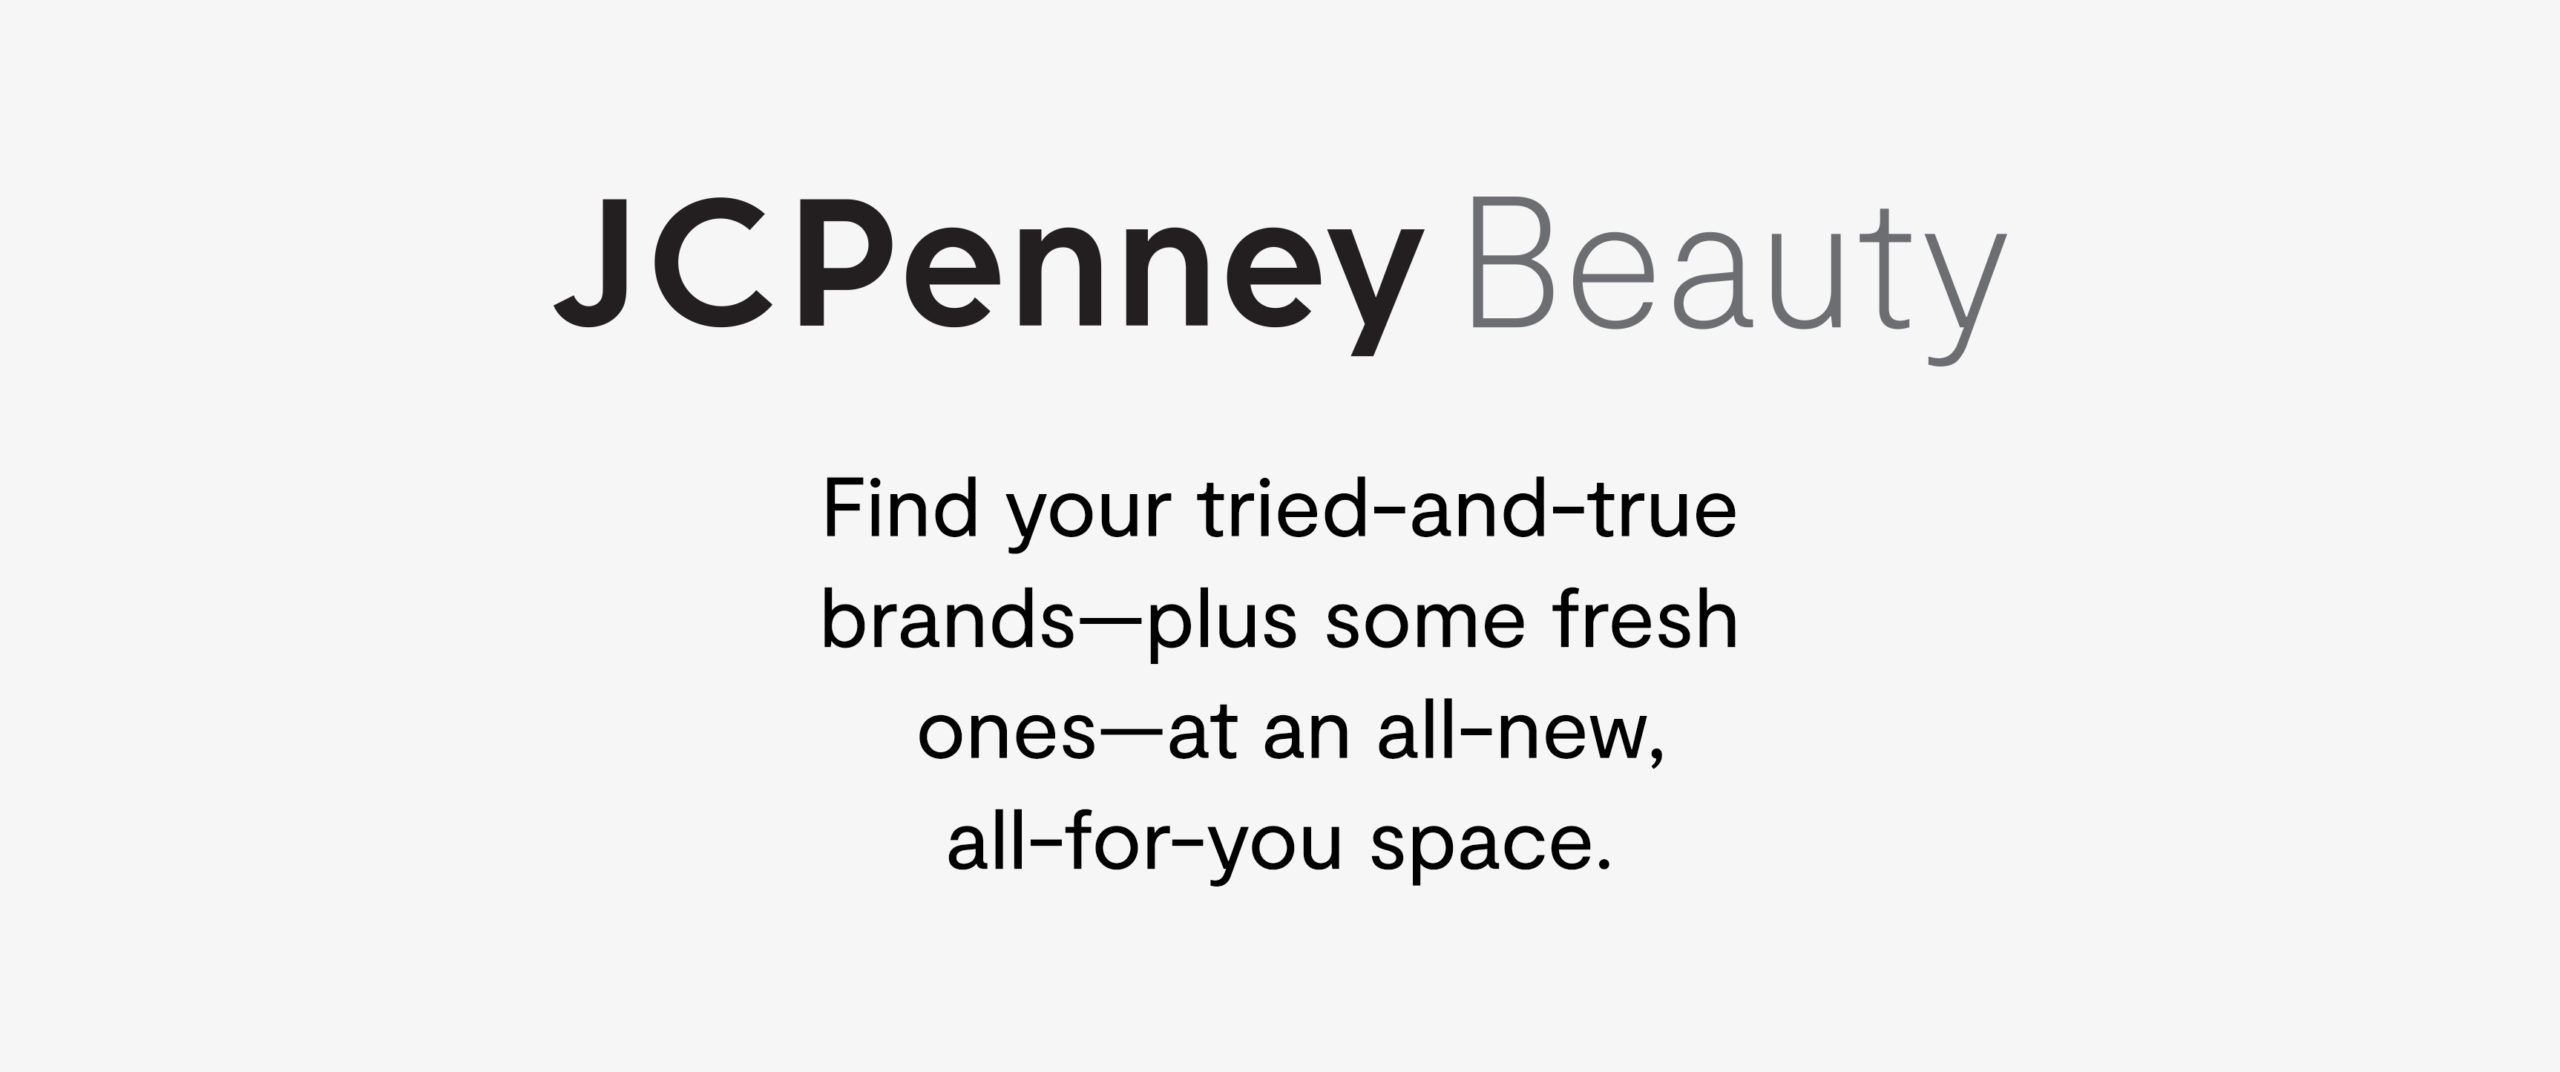 JCPenney Beauty